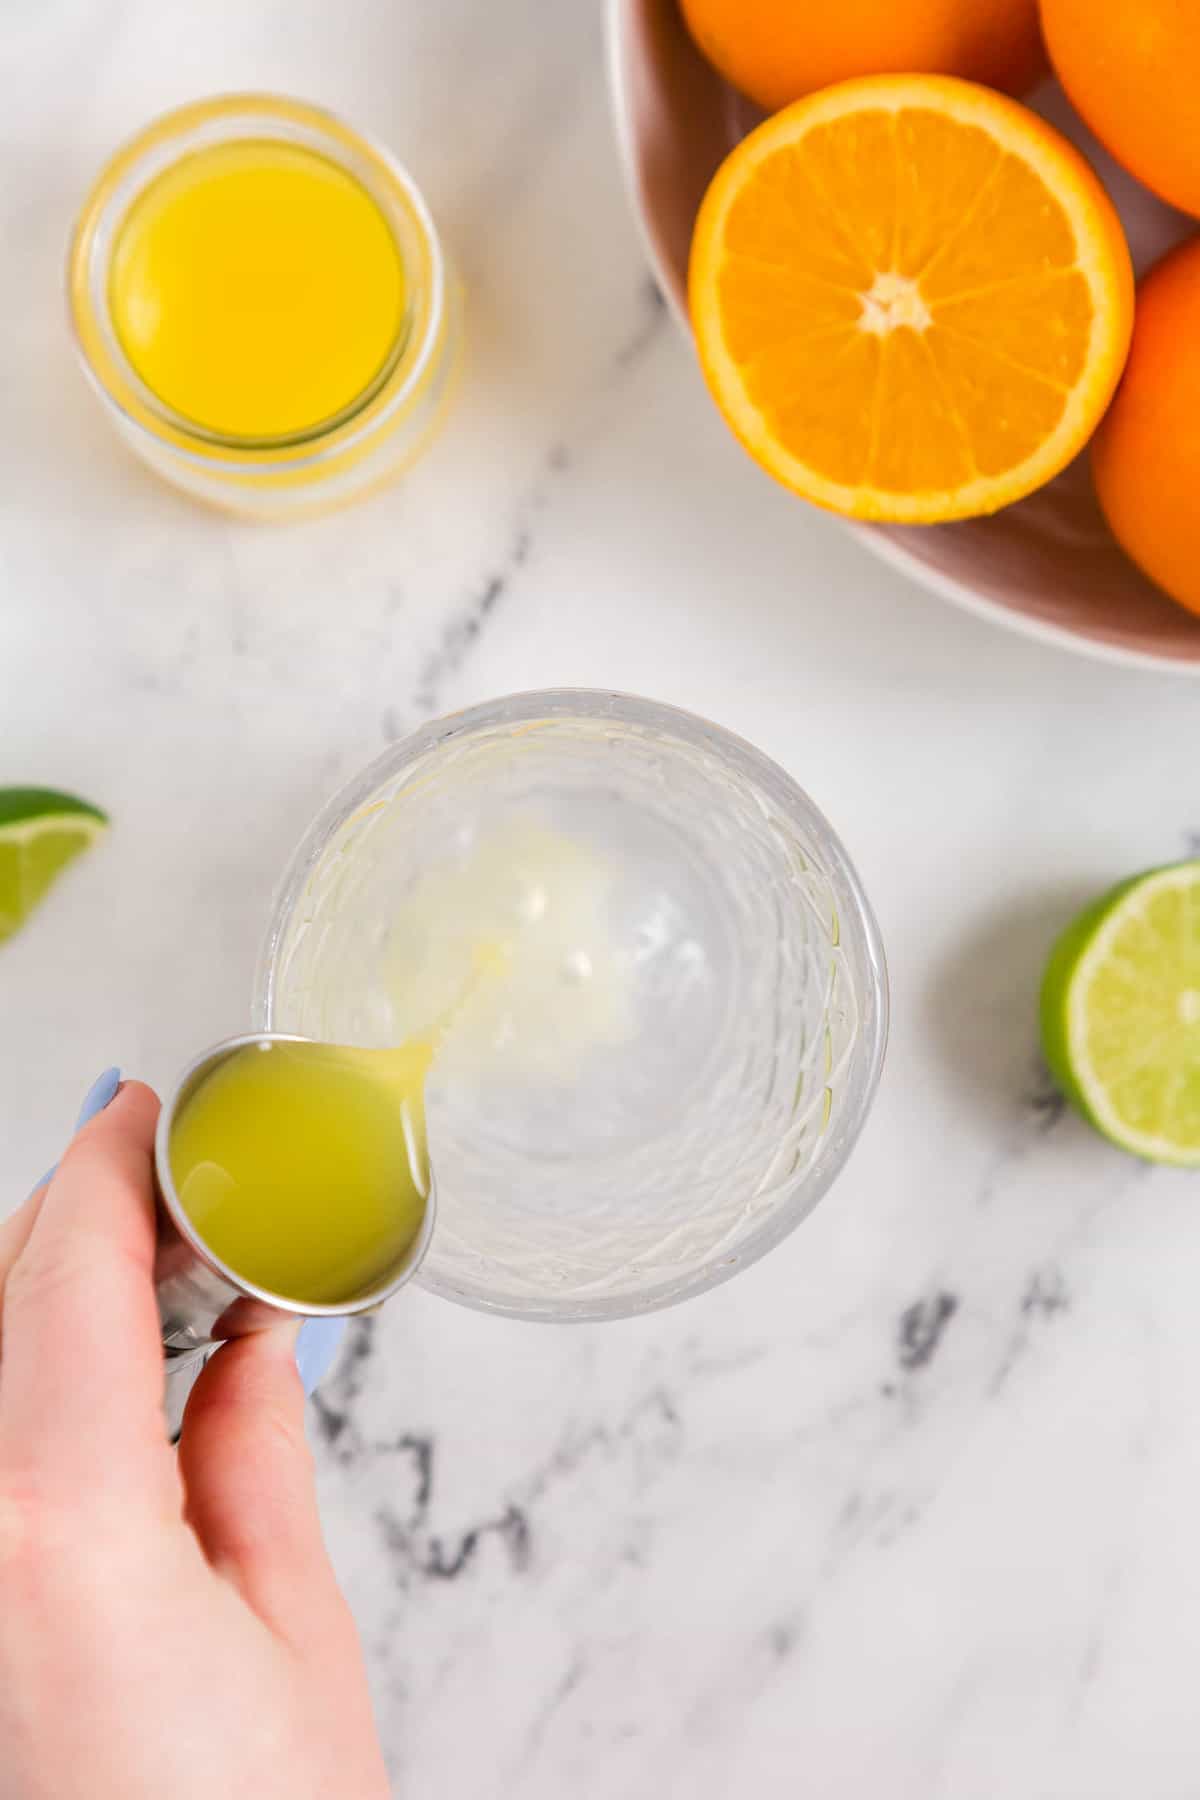 Adding Orange Juice to Tequila for Skinny Margarita Recipe